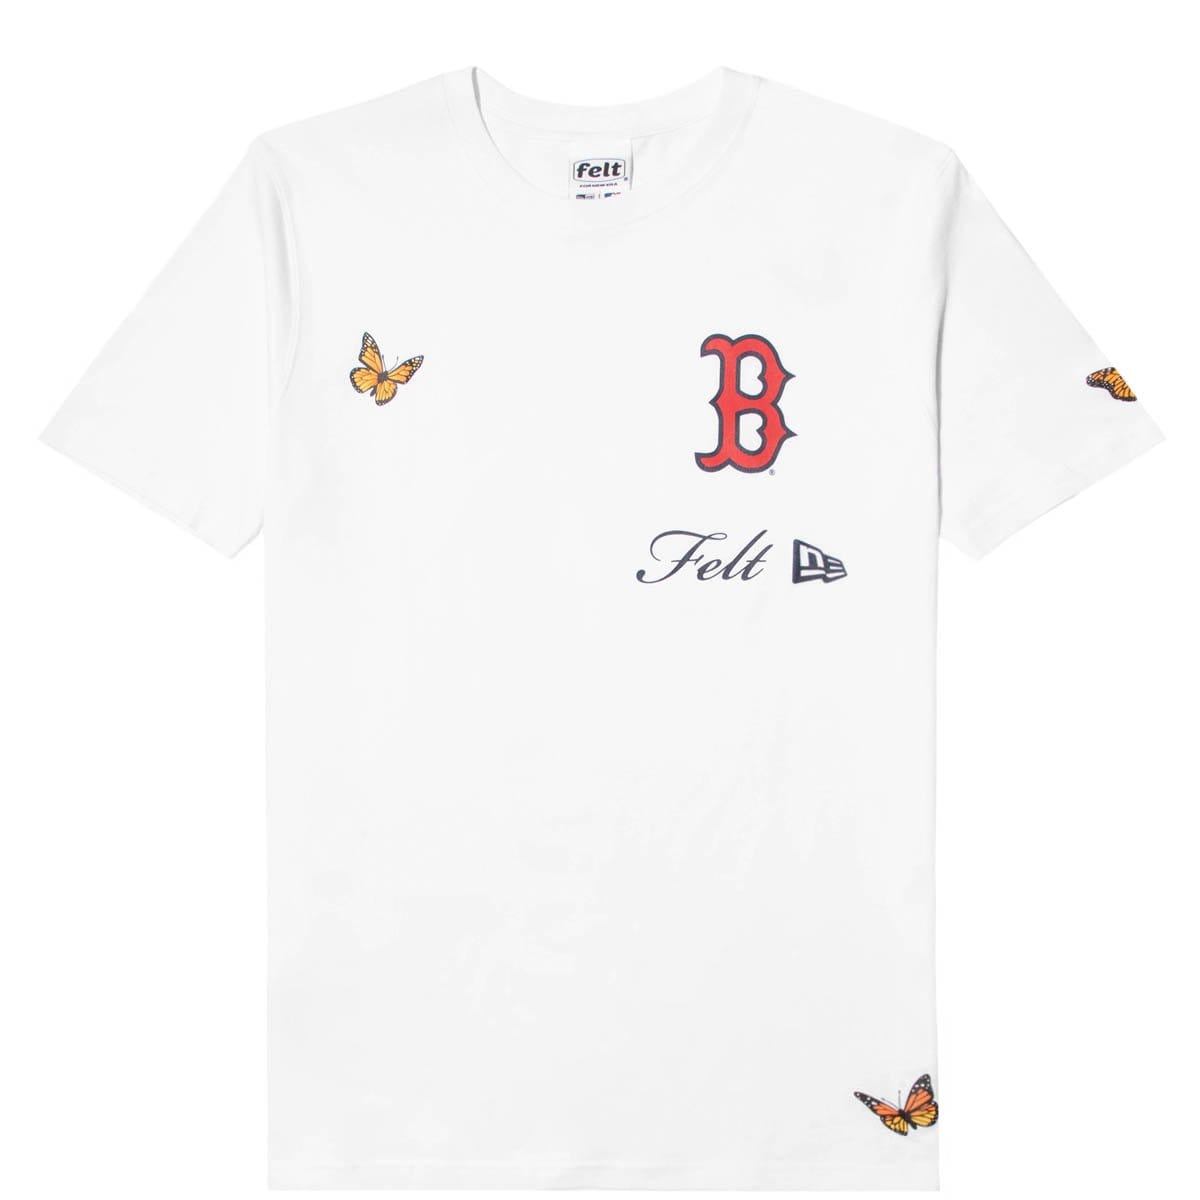 Boston Red Sox Grateful Dead Shirt - High-Quality Printed Brand